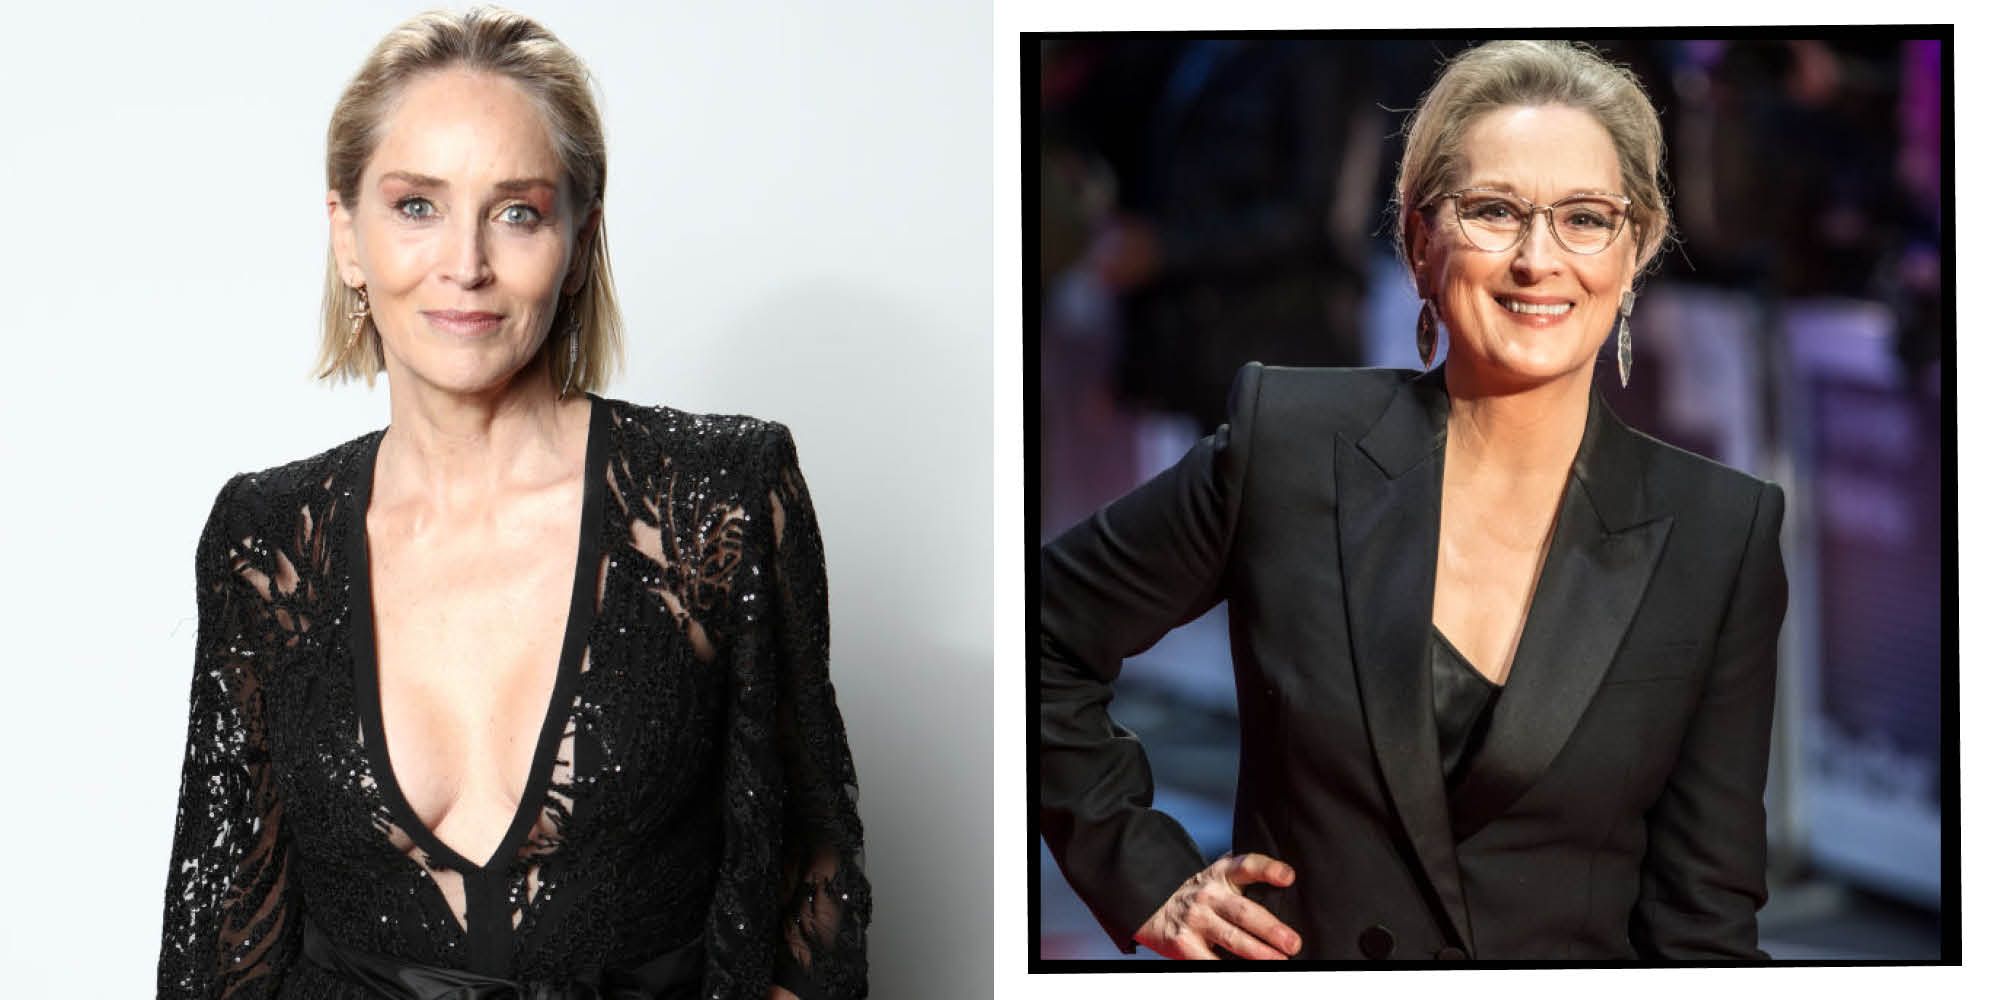 Emma Stone Related To Sharon Stone